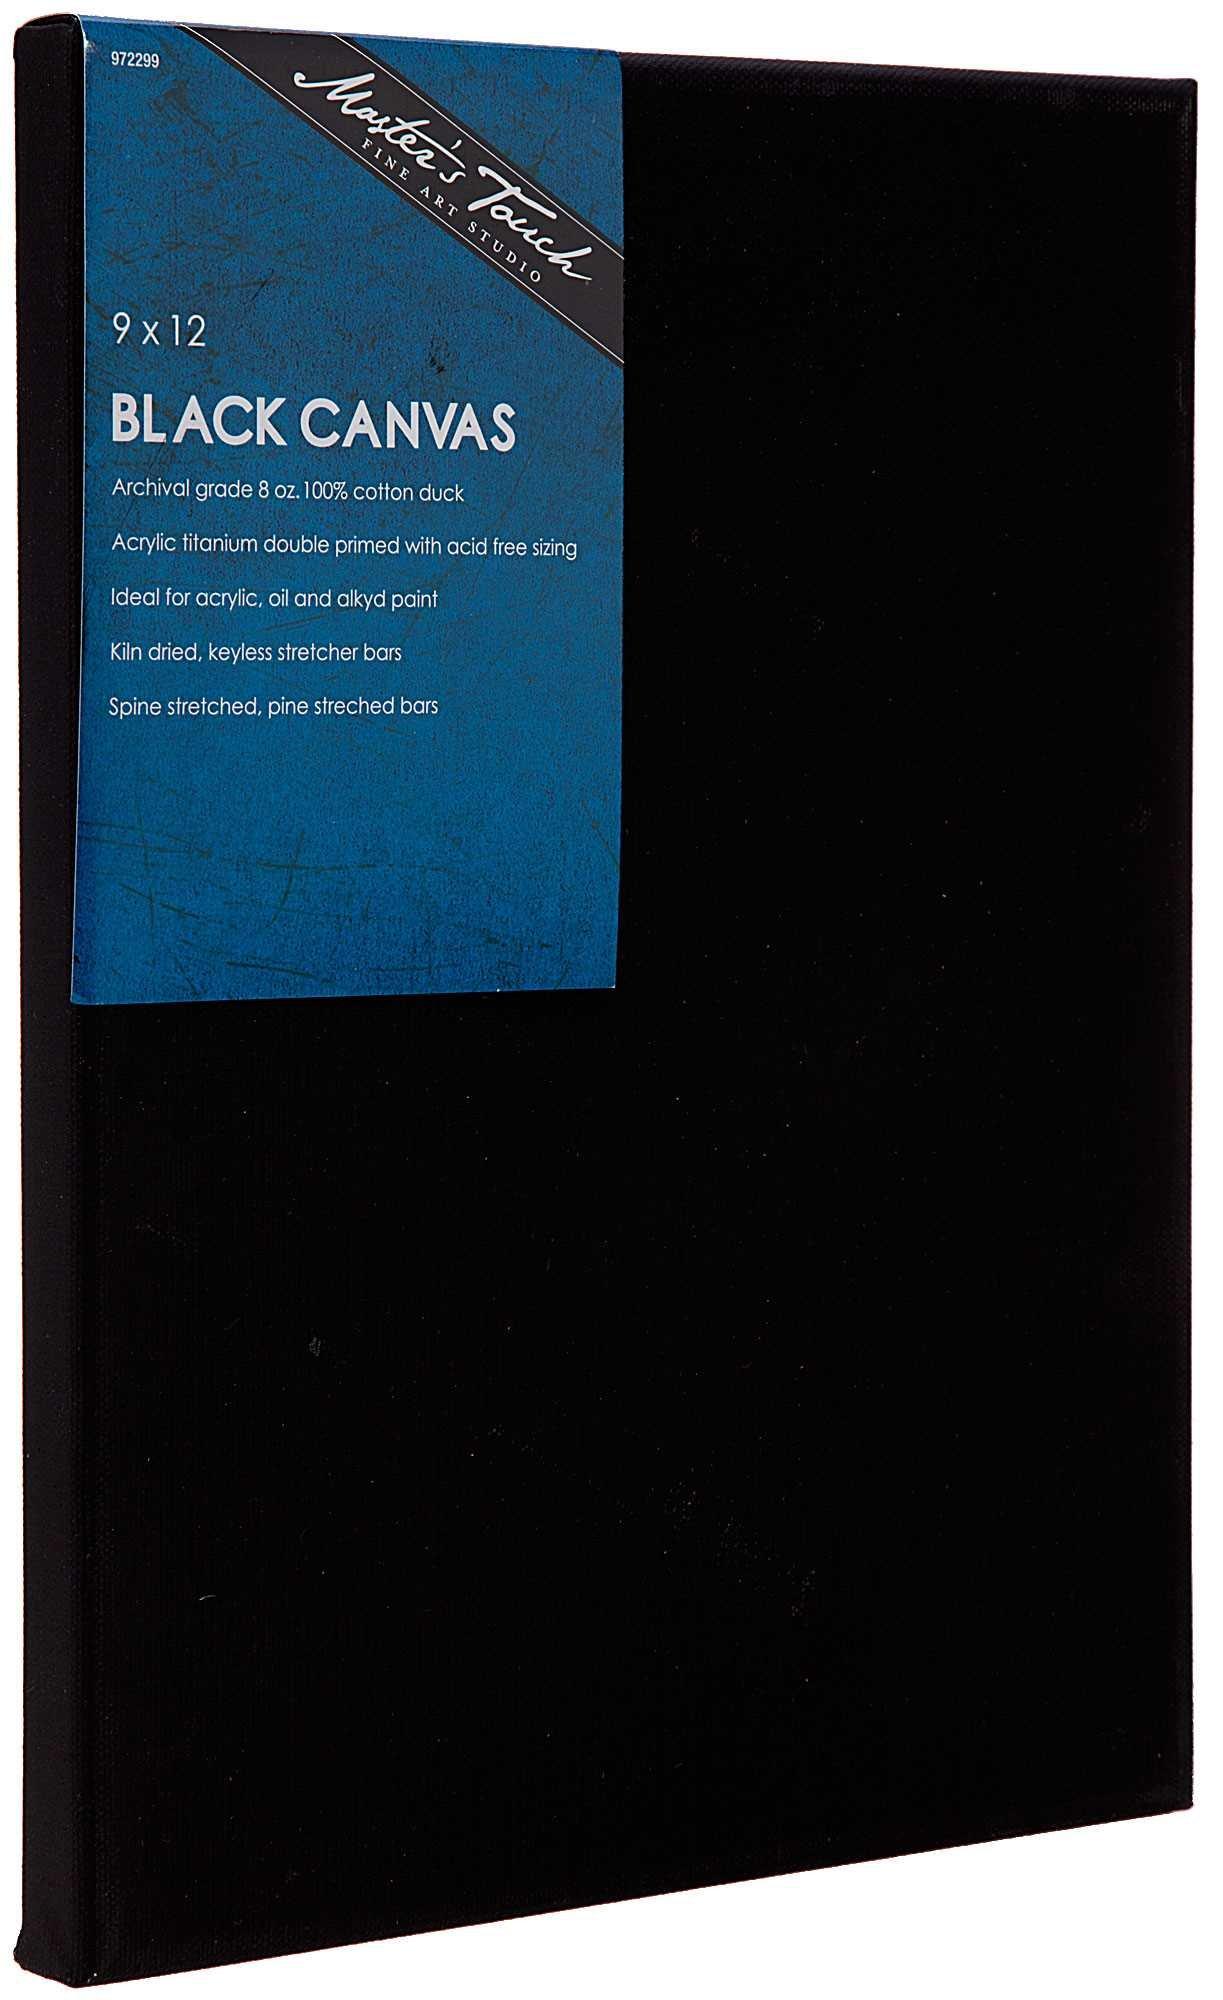 Black Primed Canvas - 8 oz - Triple Primed - Ready to Paint